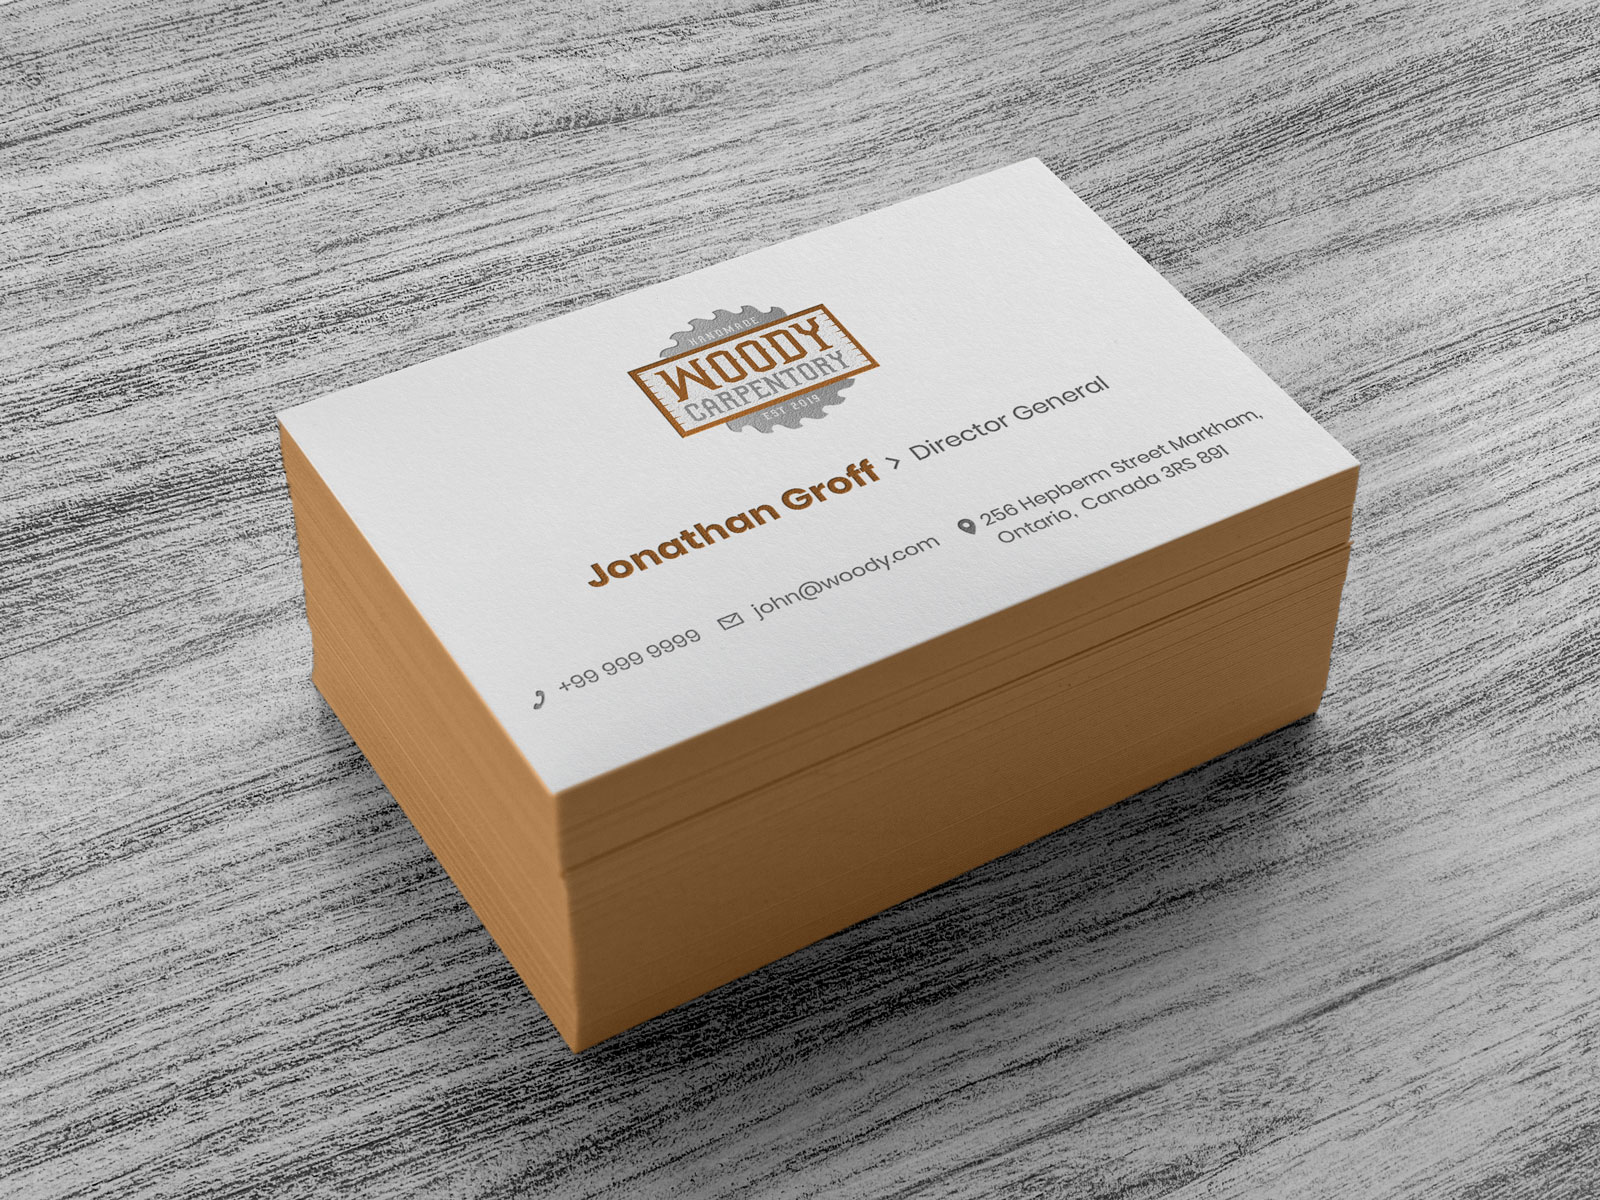 Download Free Logo Design, Business Card Template & Mockup PSD | Designbolts